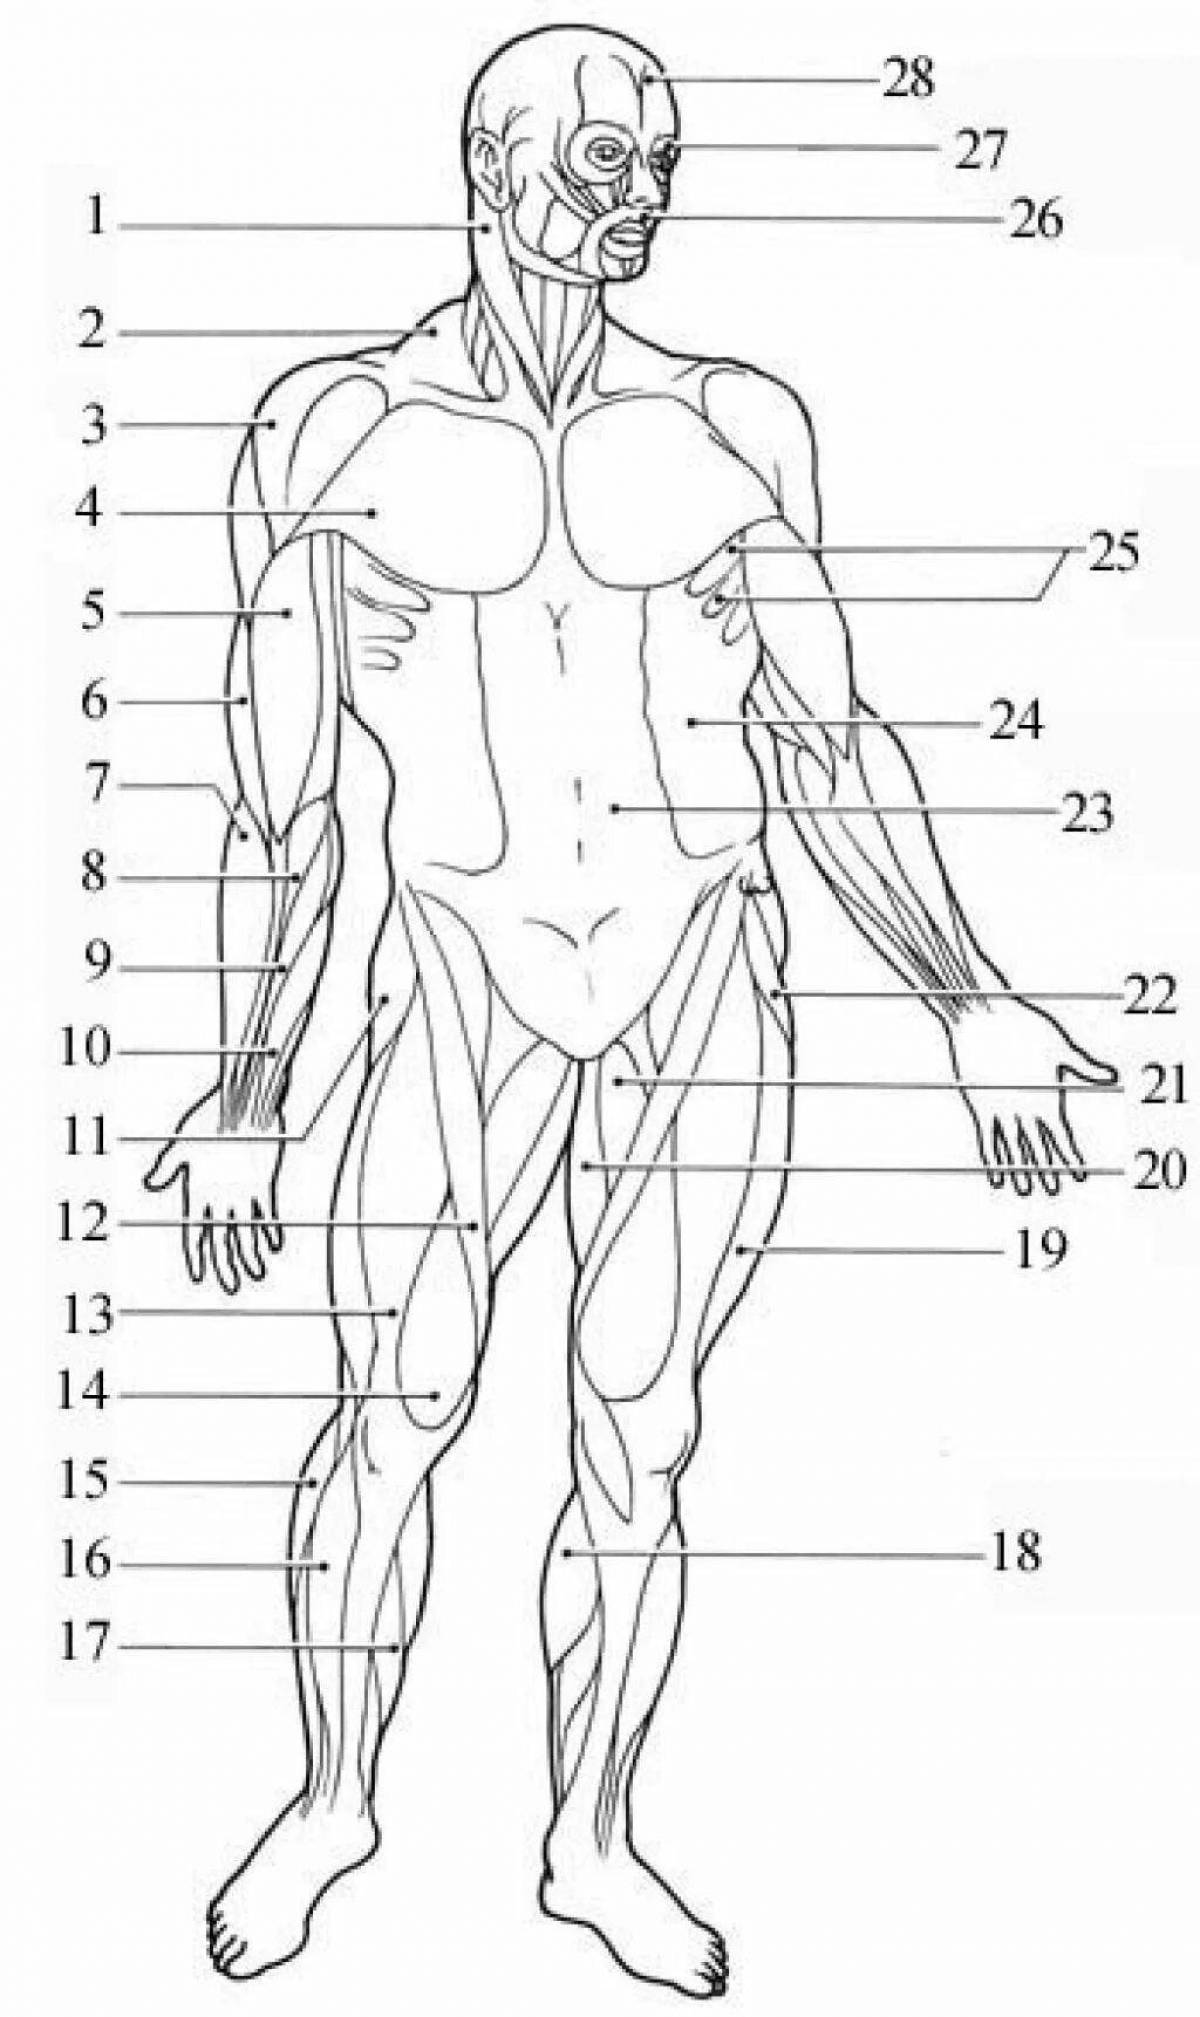 Туловище человека. Строение тела человека. Схема человеческого тела. Анатомия человека для разукрашивания. Части человека анатомия.